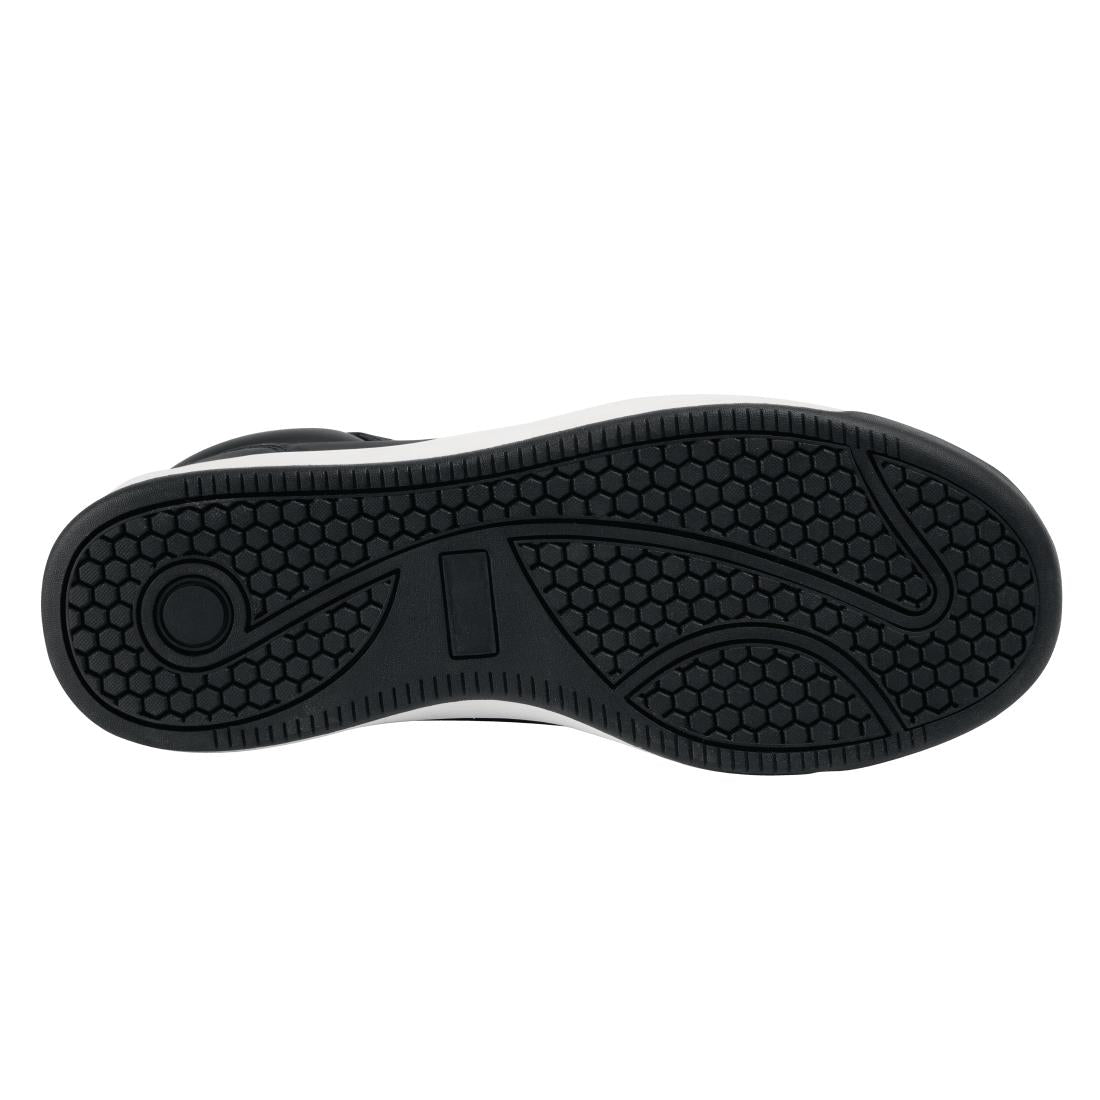 BB422-41 Slipbuster Sneaker Boots Black 41 JD Catering Equipment Solutions Ltd